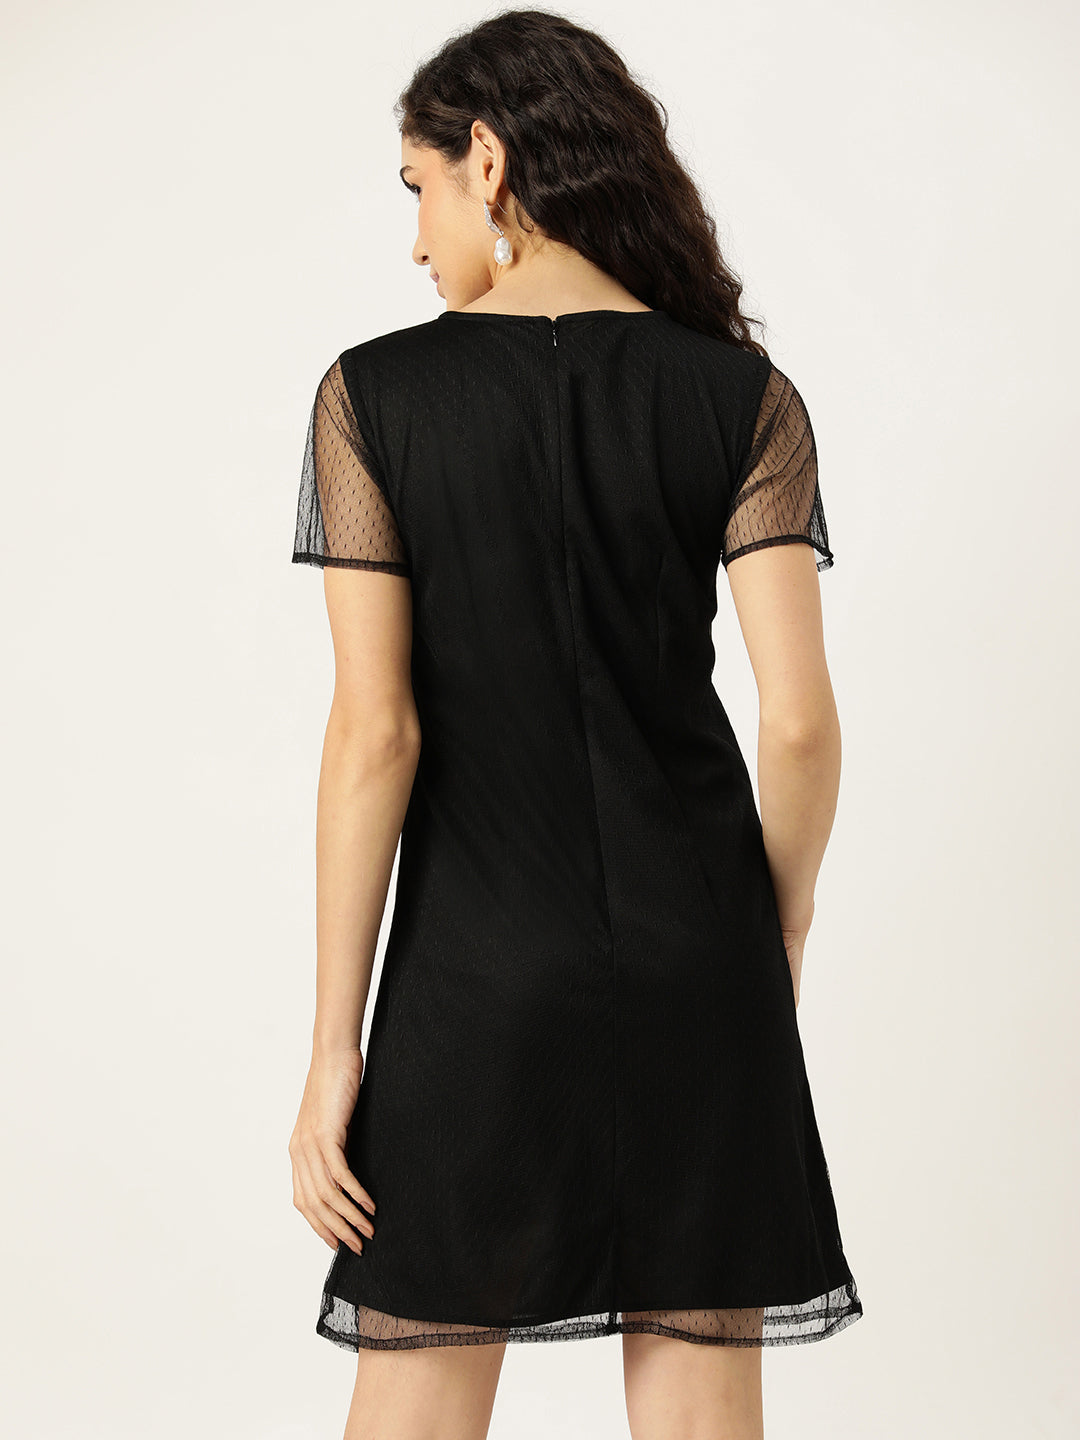 Black Net A-Line Mini Dress